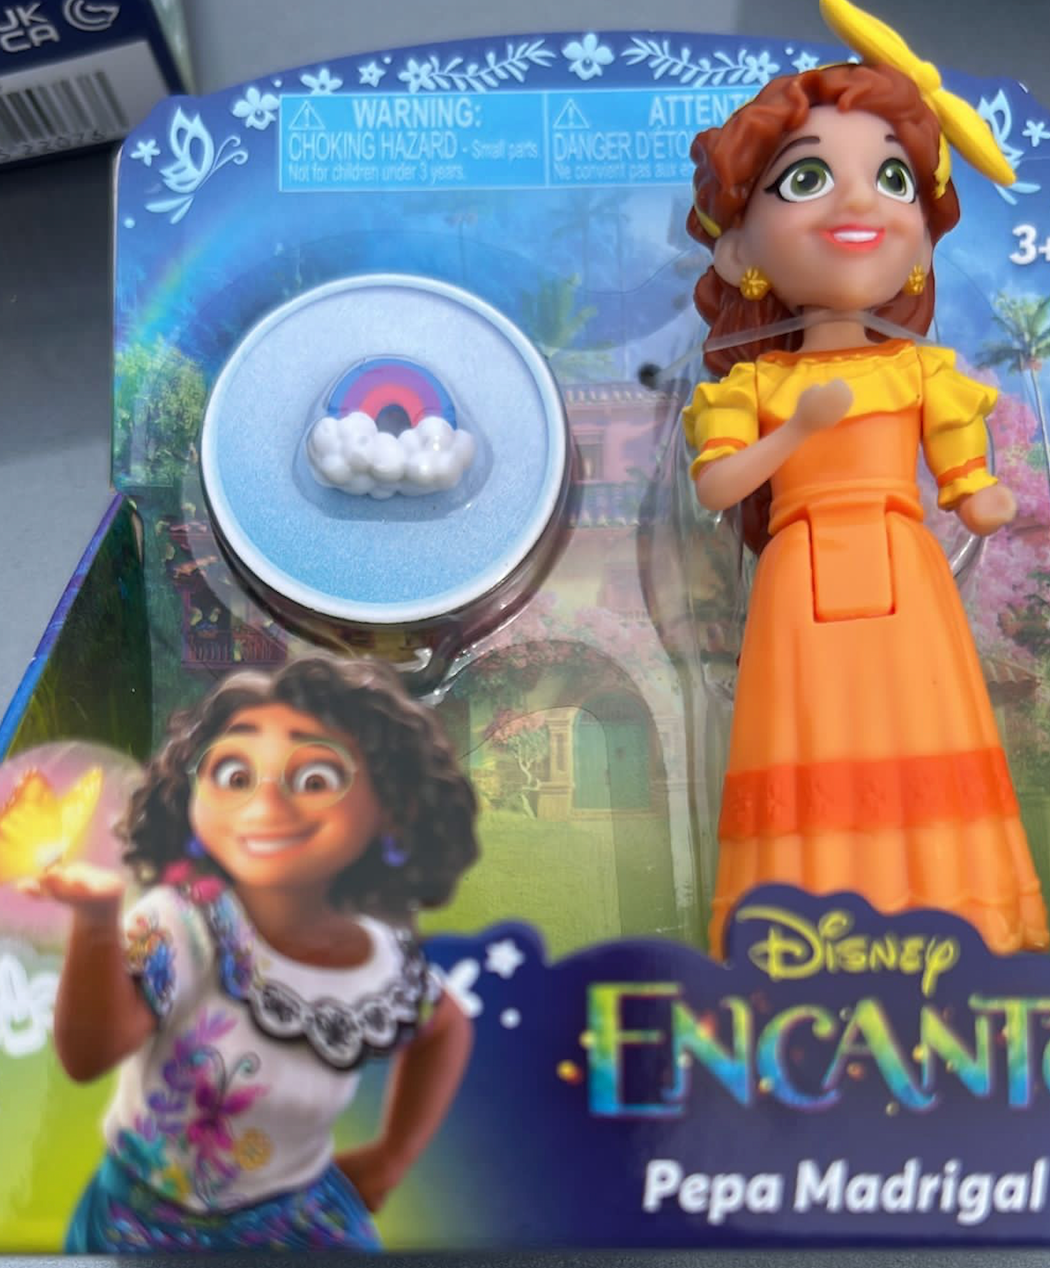 Disney Encanto Pepa Madrigal Small Doll Toy New with Box